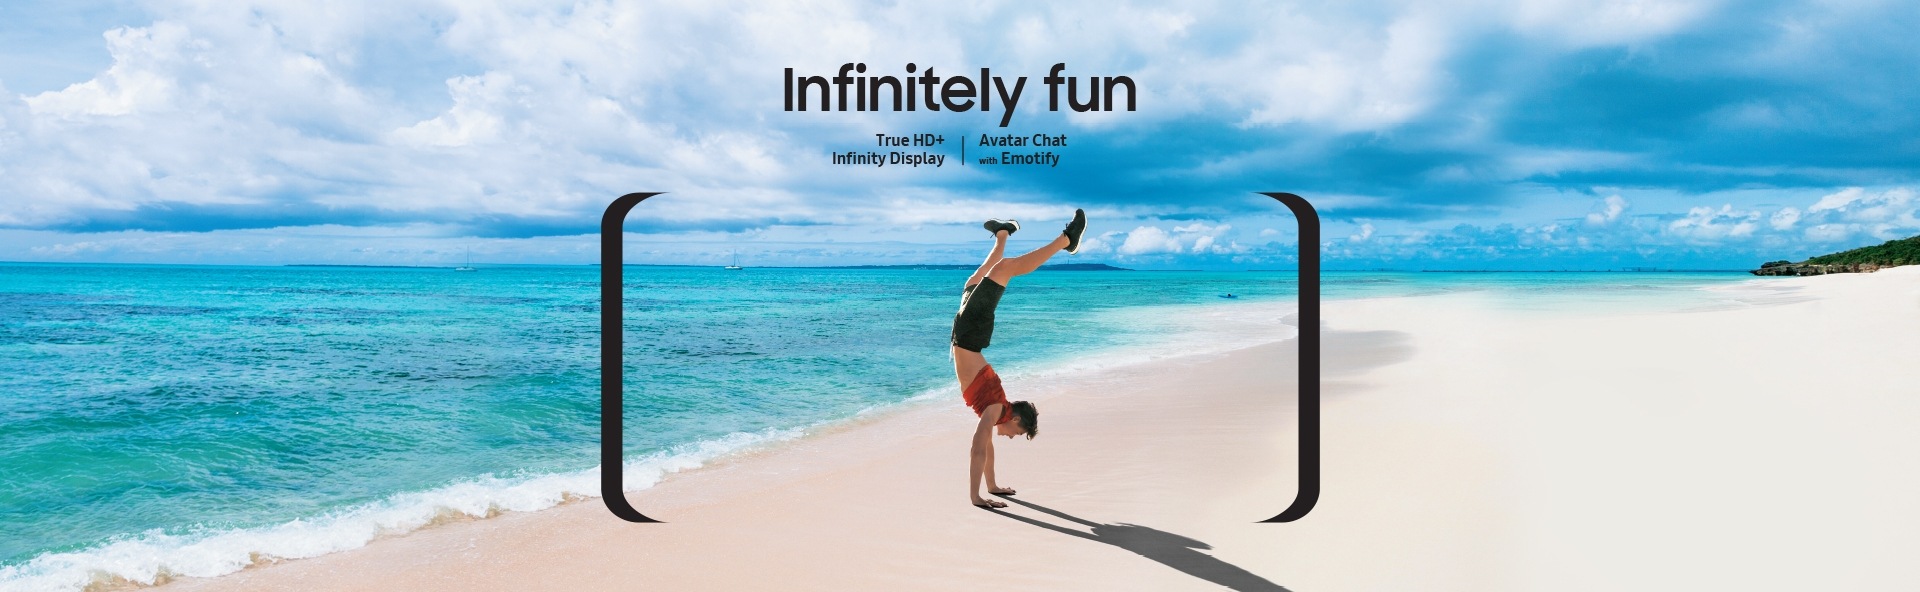 Infinitely Fun - Samsung Galaxy J4+